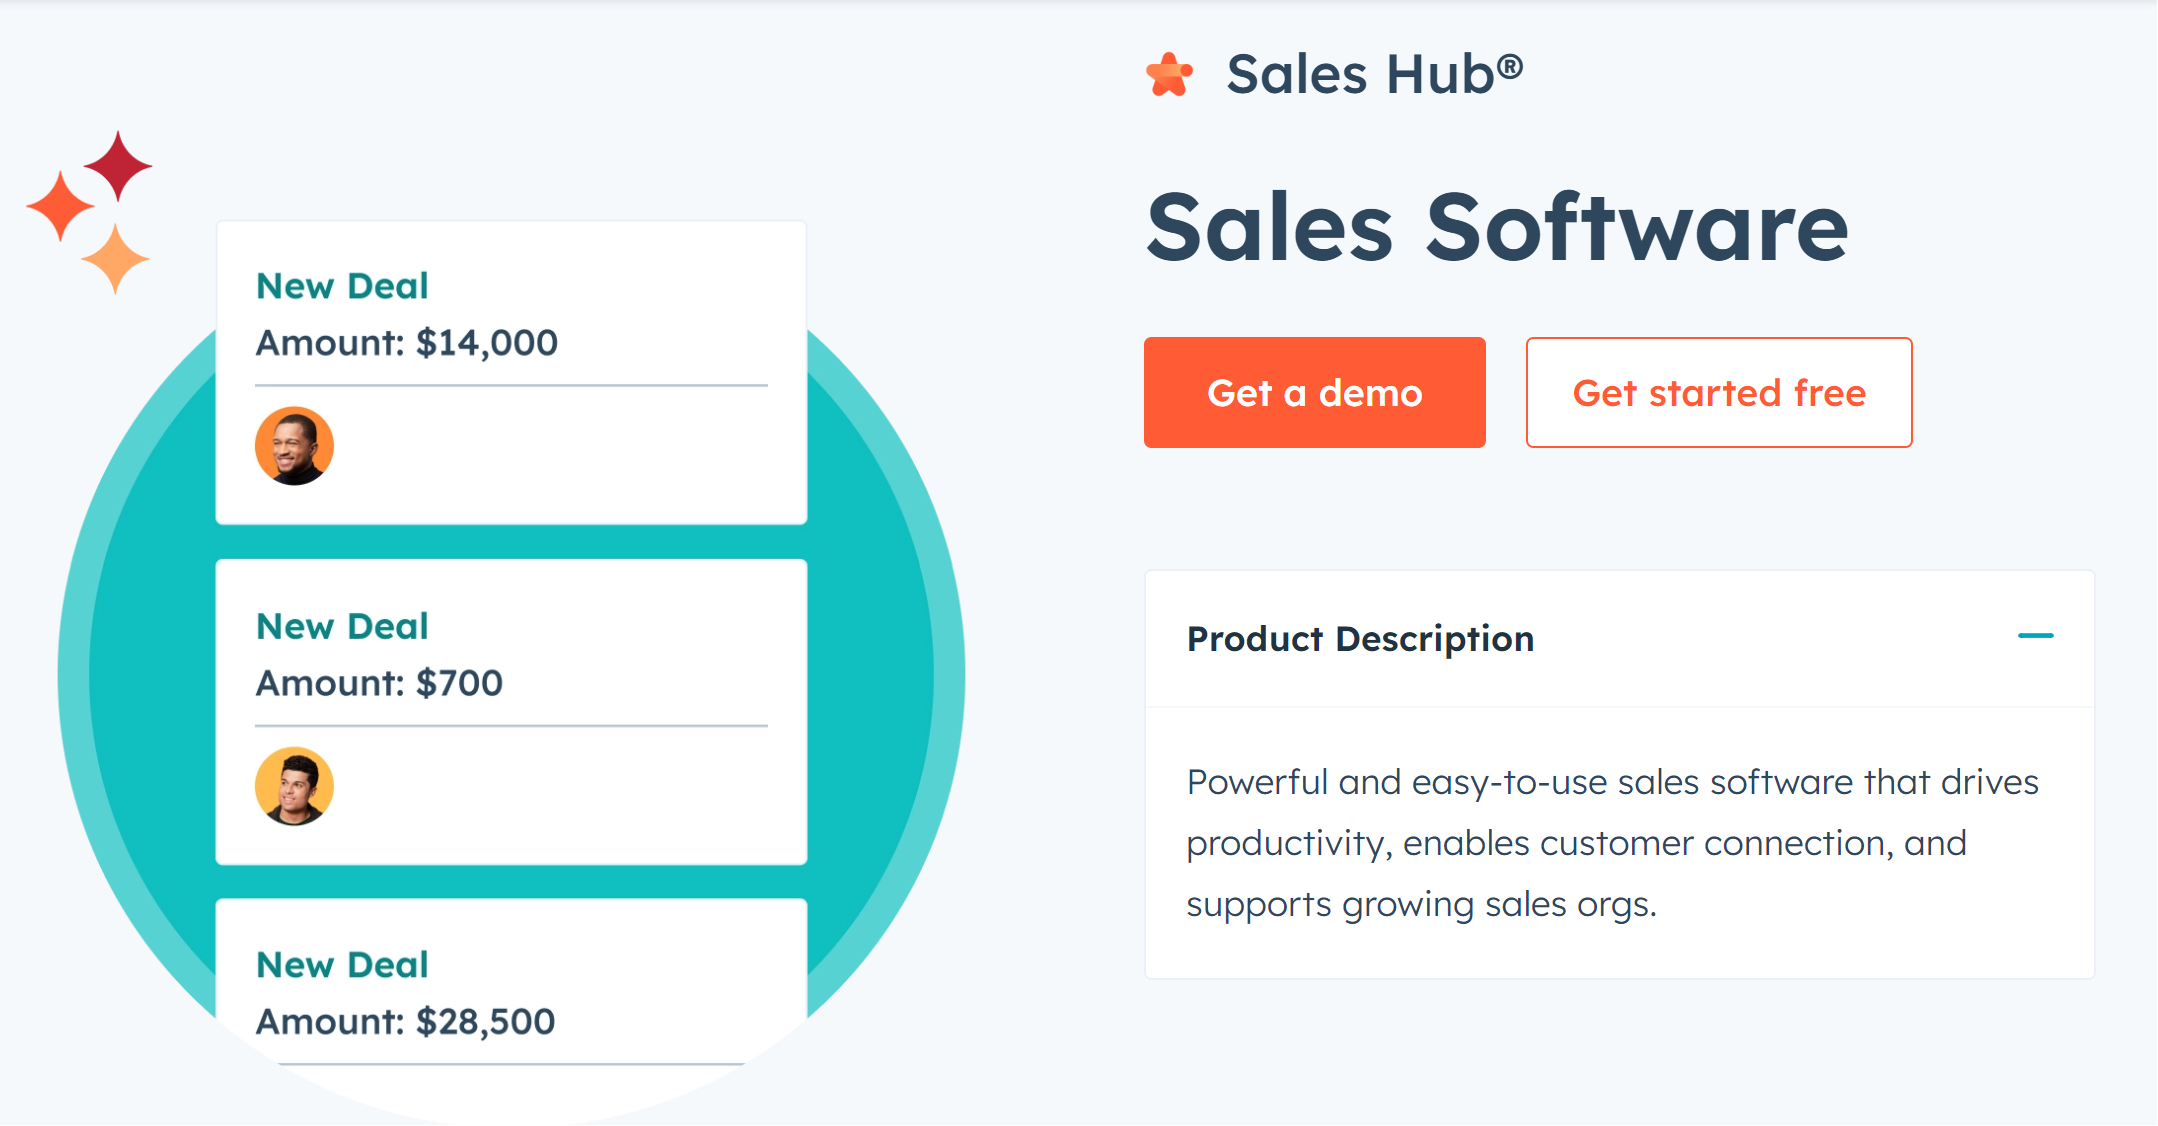 Sales software